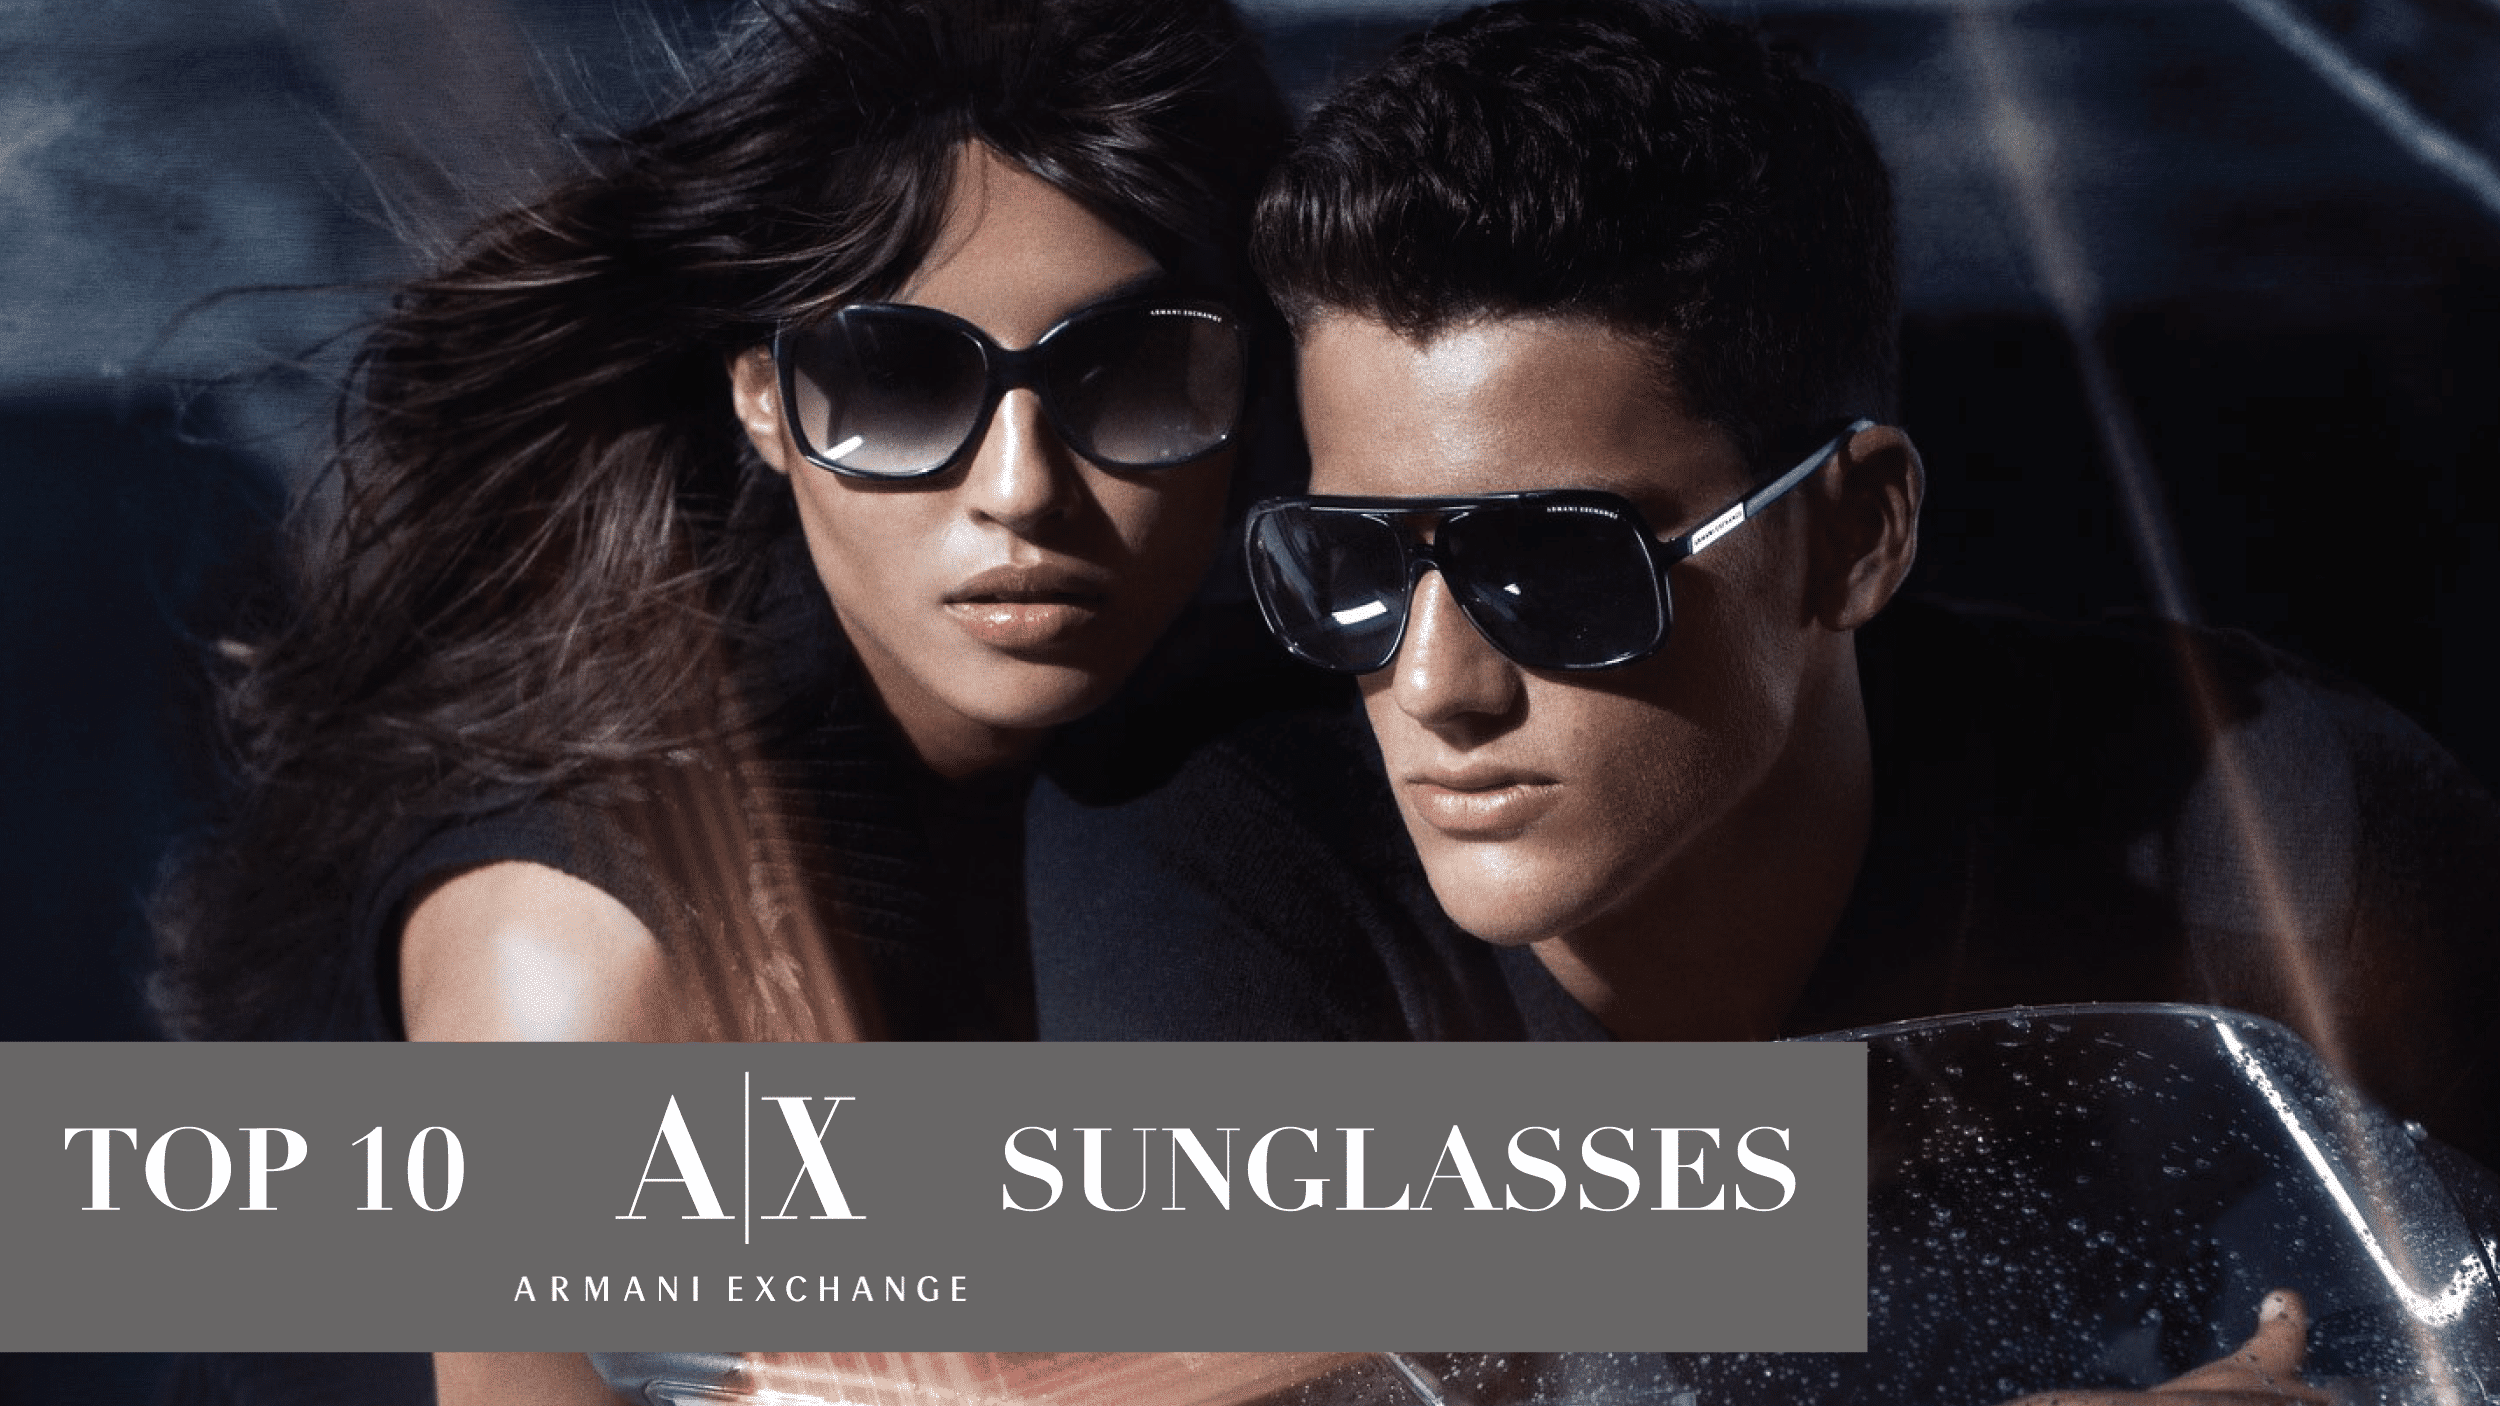 The Top 10 Armani Exchange Sunglasses Header